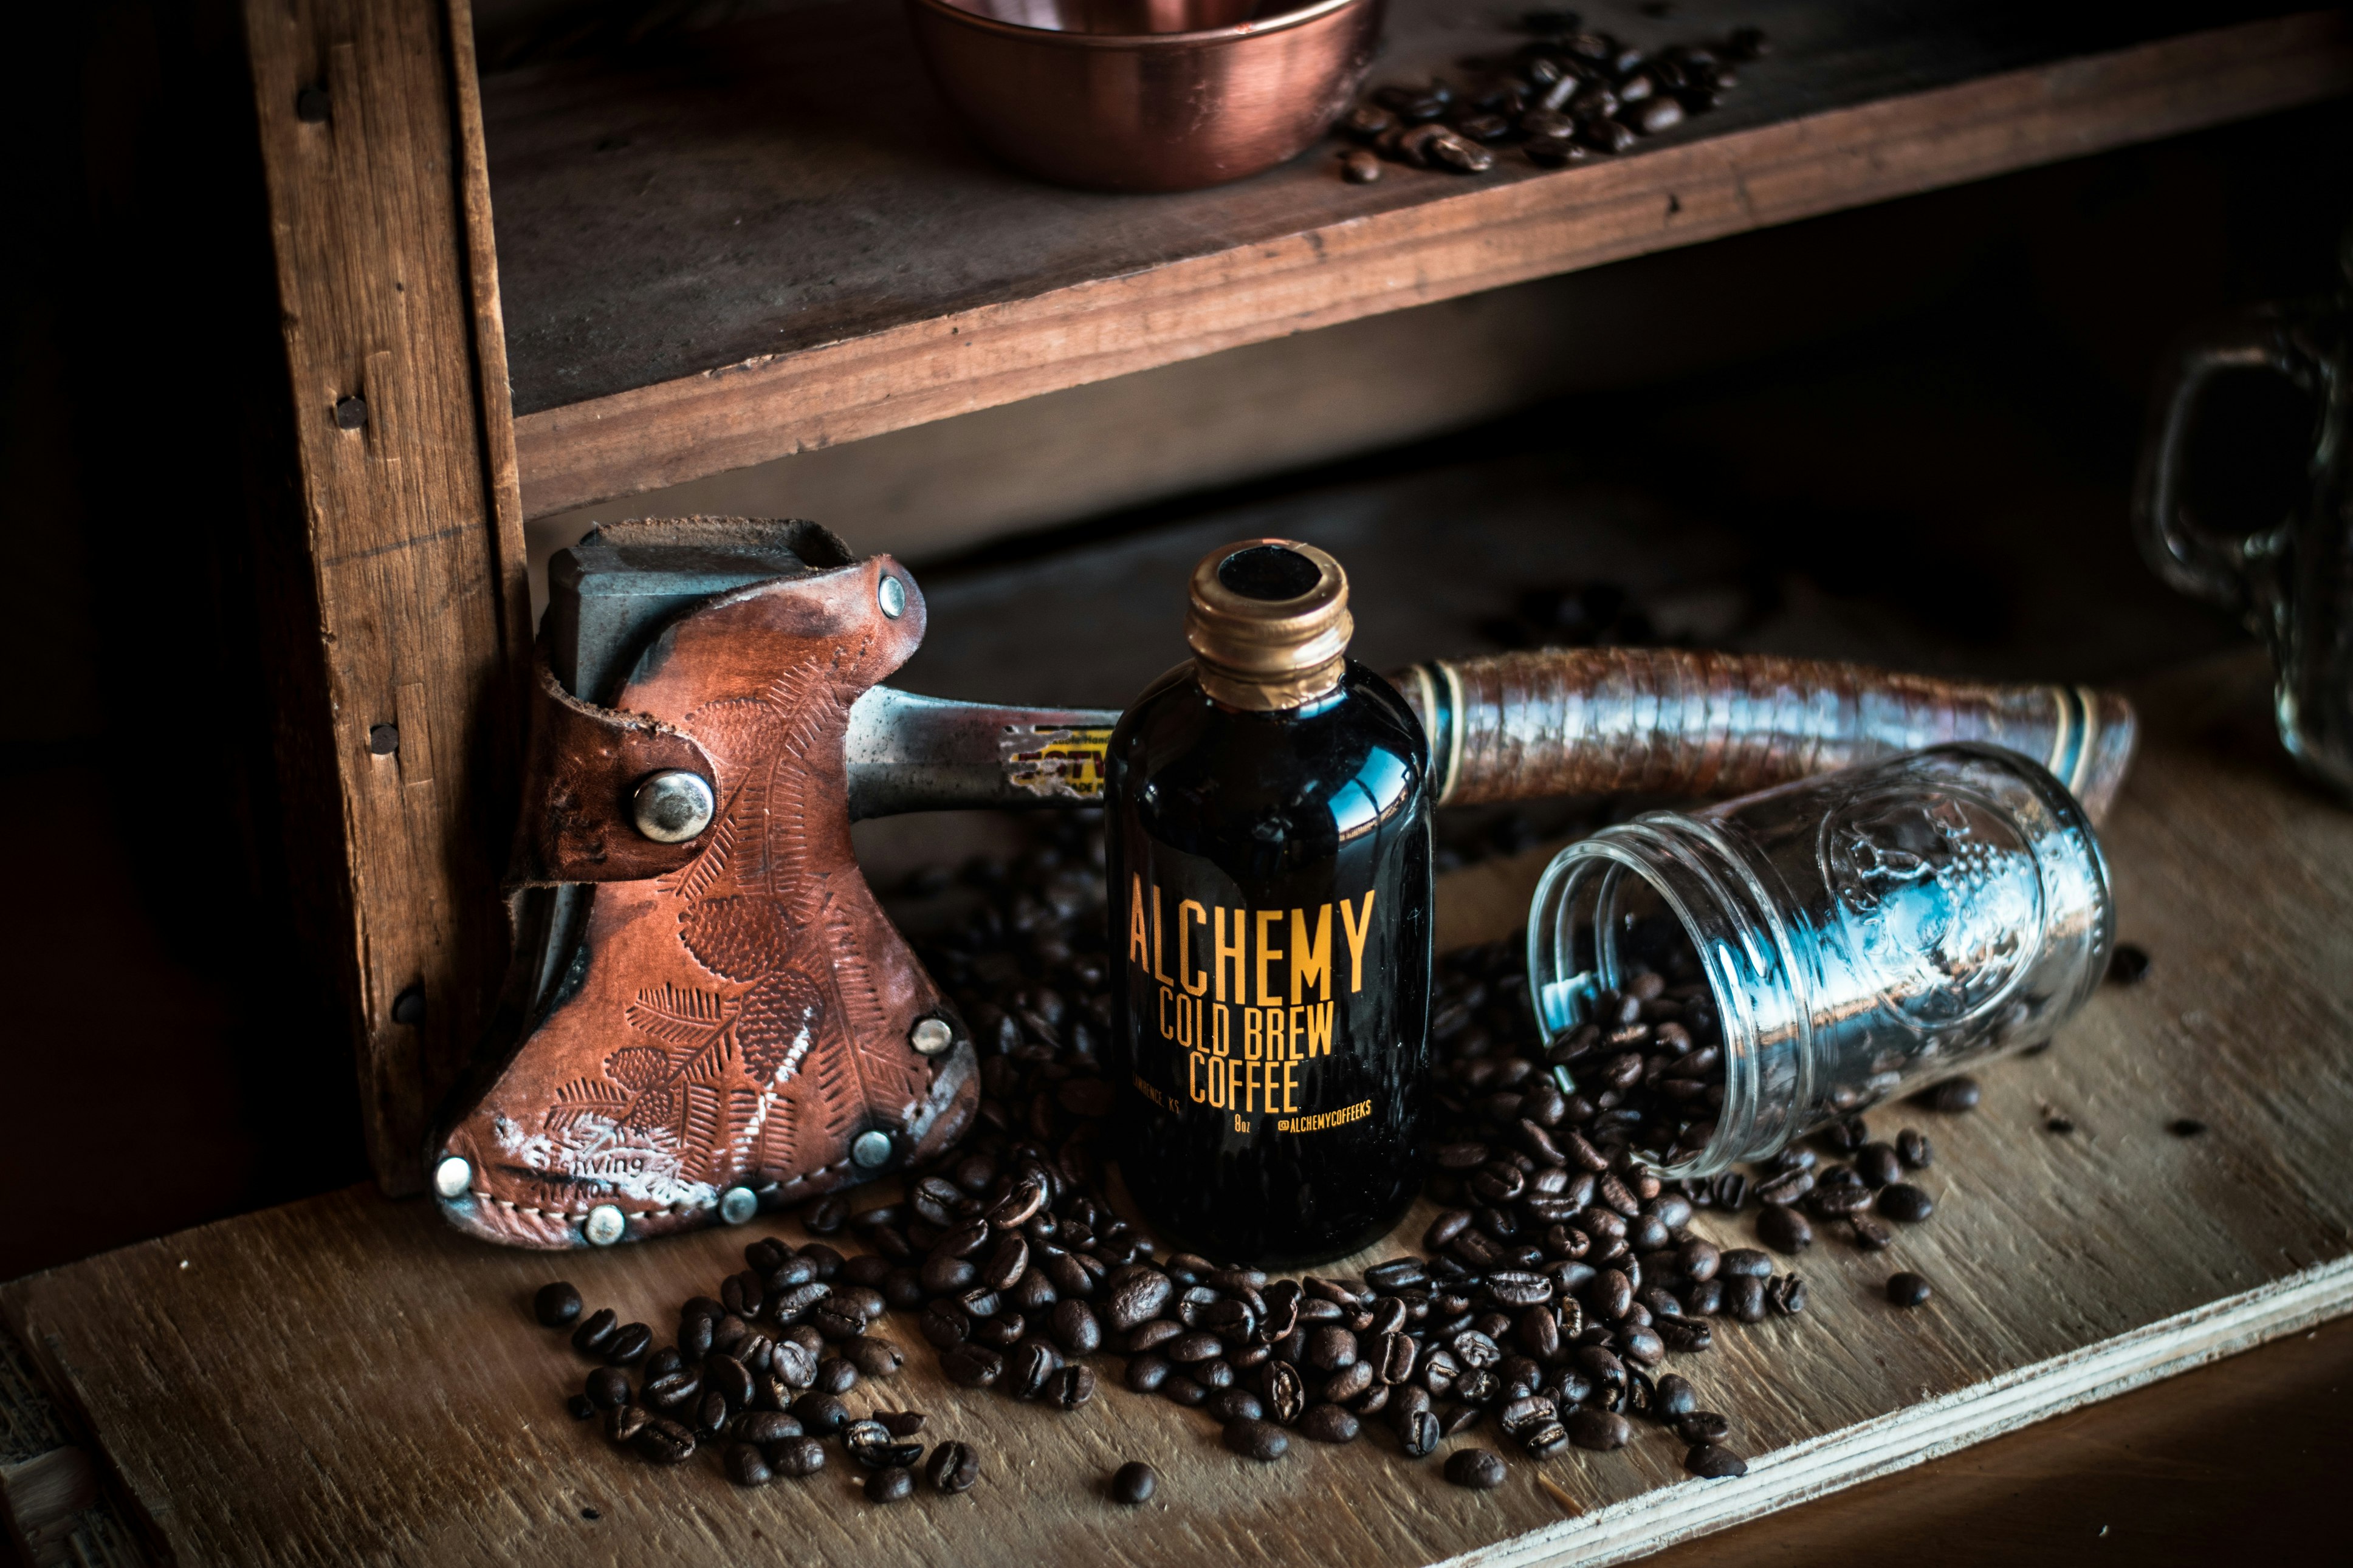 alchemy cold brew coffee bottle near the brown hatchet on brown wooden rack